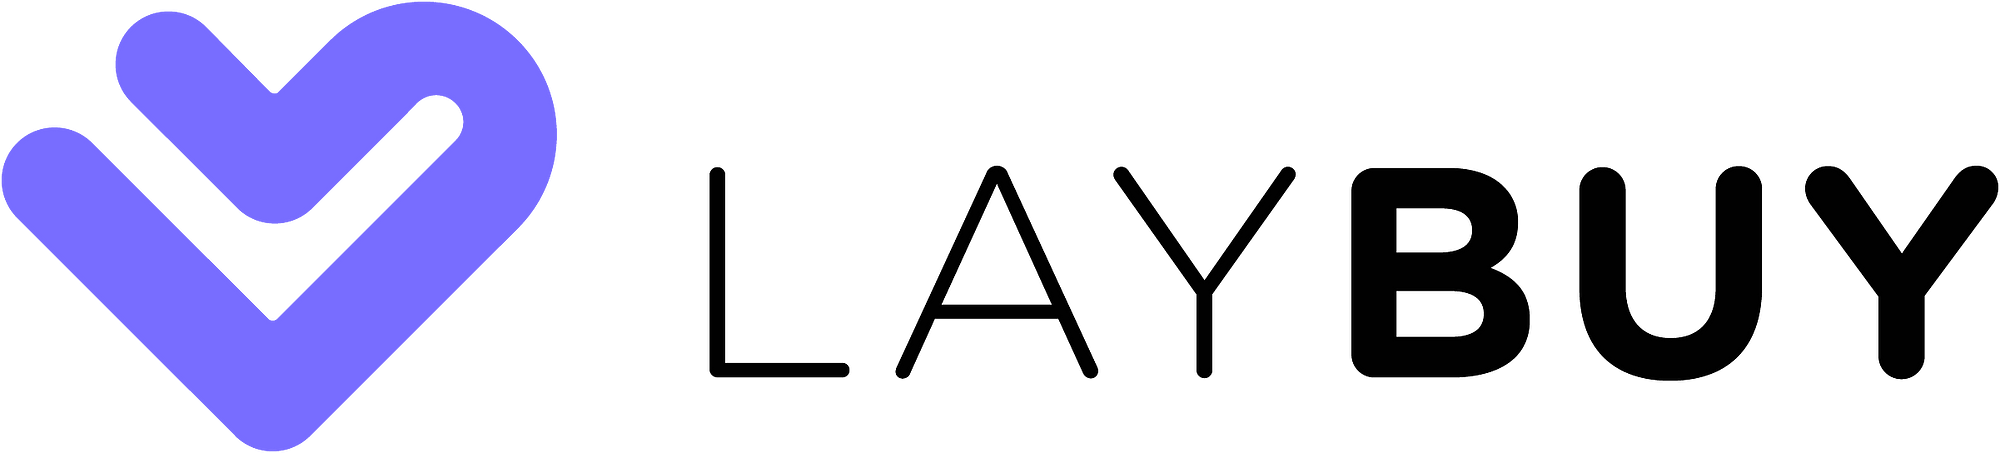 Lay-Buy logo